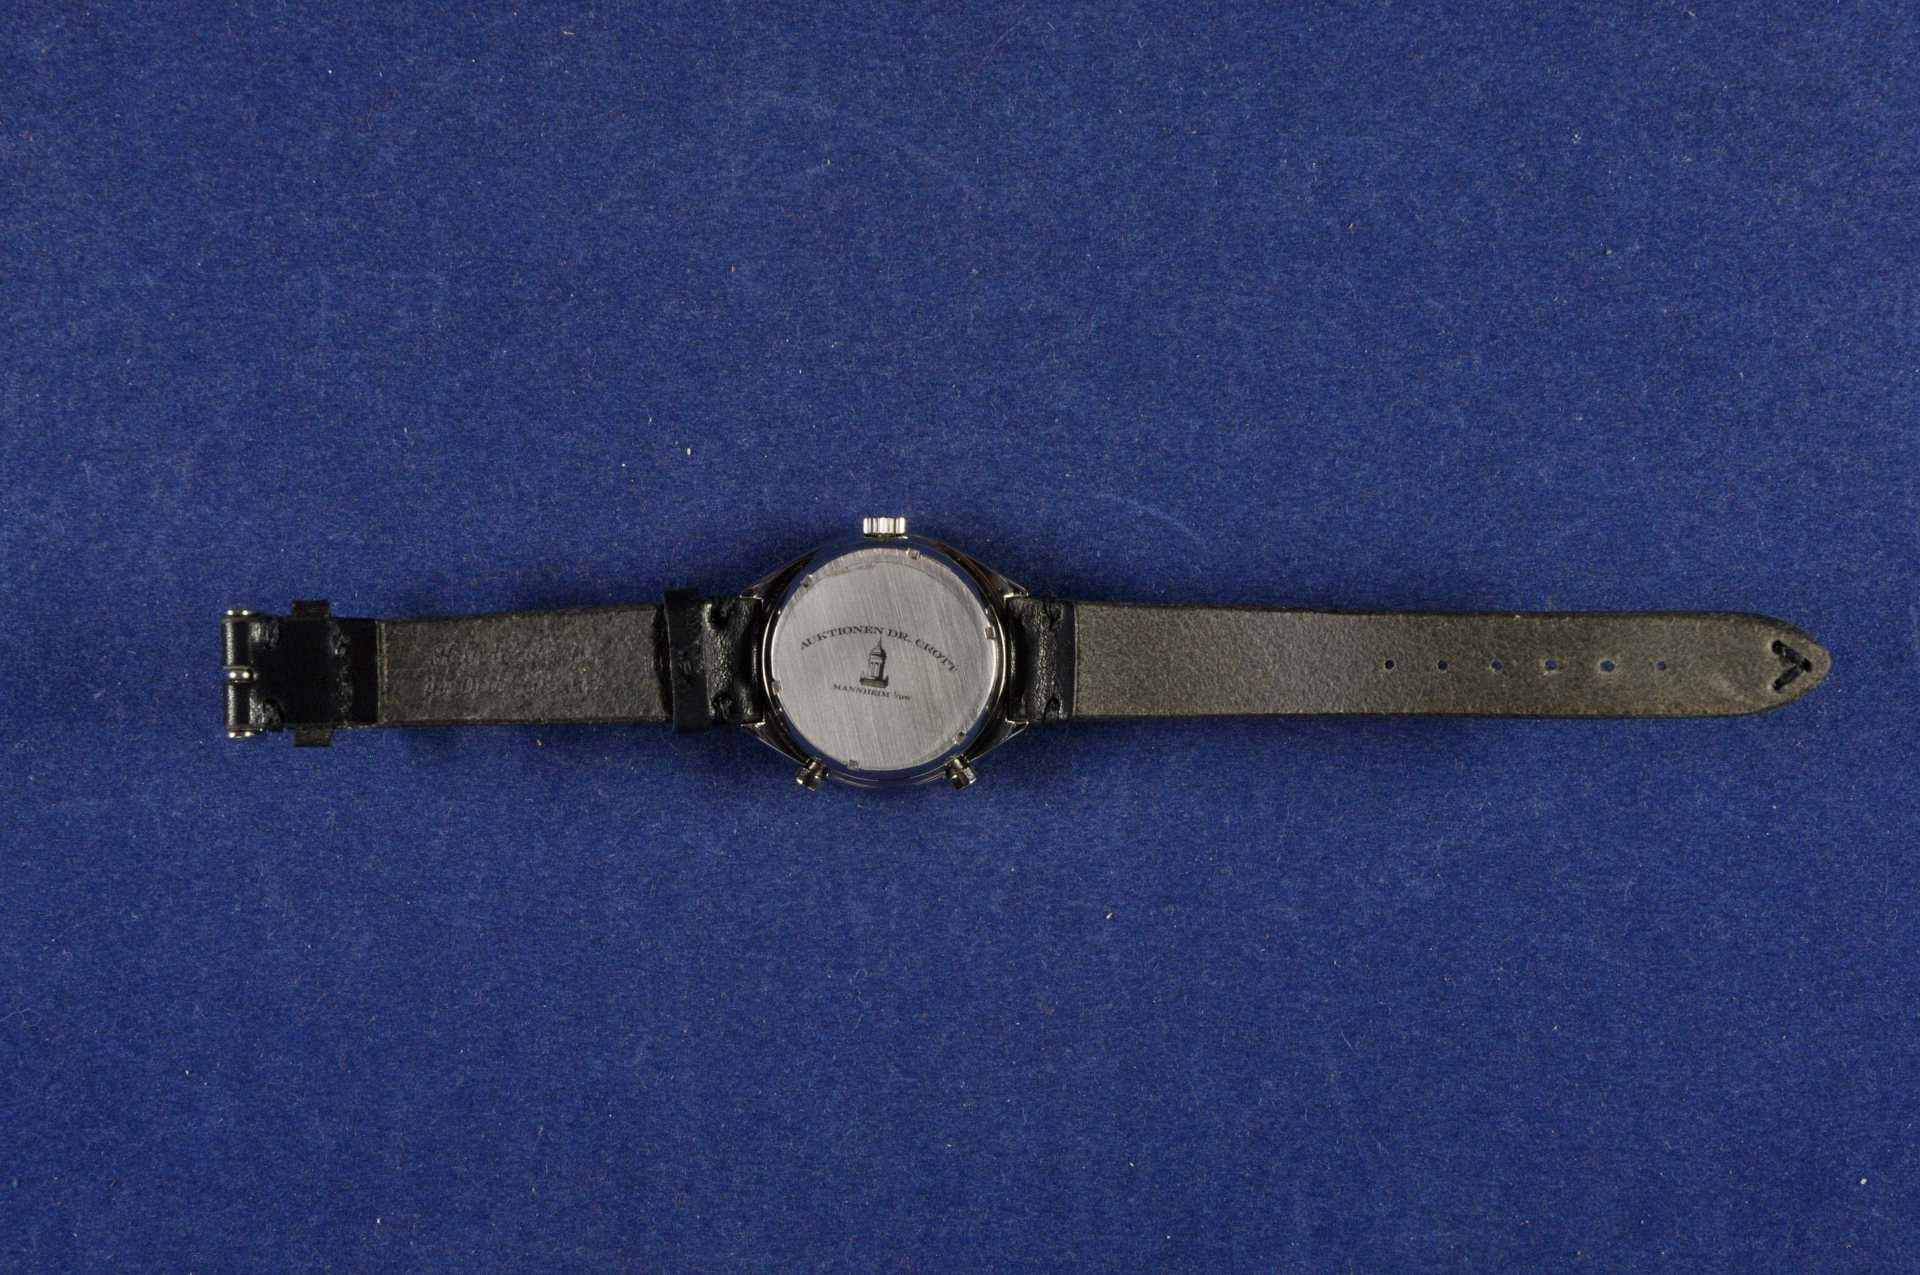 Herren Armband Uhr \Carrera Heuer\ Chronograph. Ca. 38mm, um 1975, Edelstahlgehäuse Nr. 110573,  Ank - Bild 4 aus 6